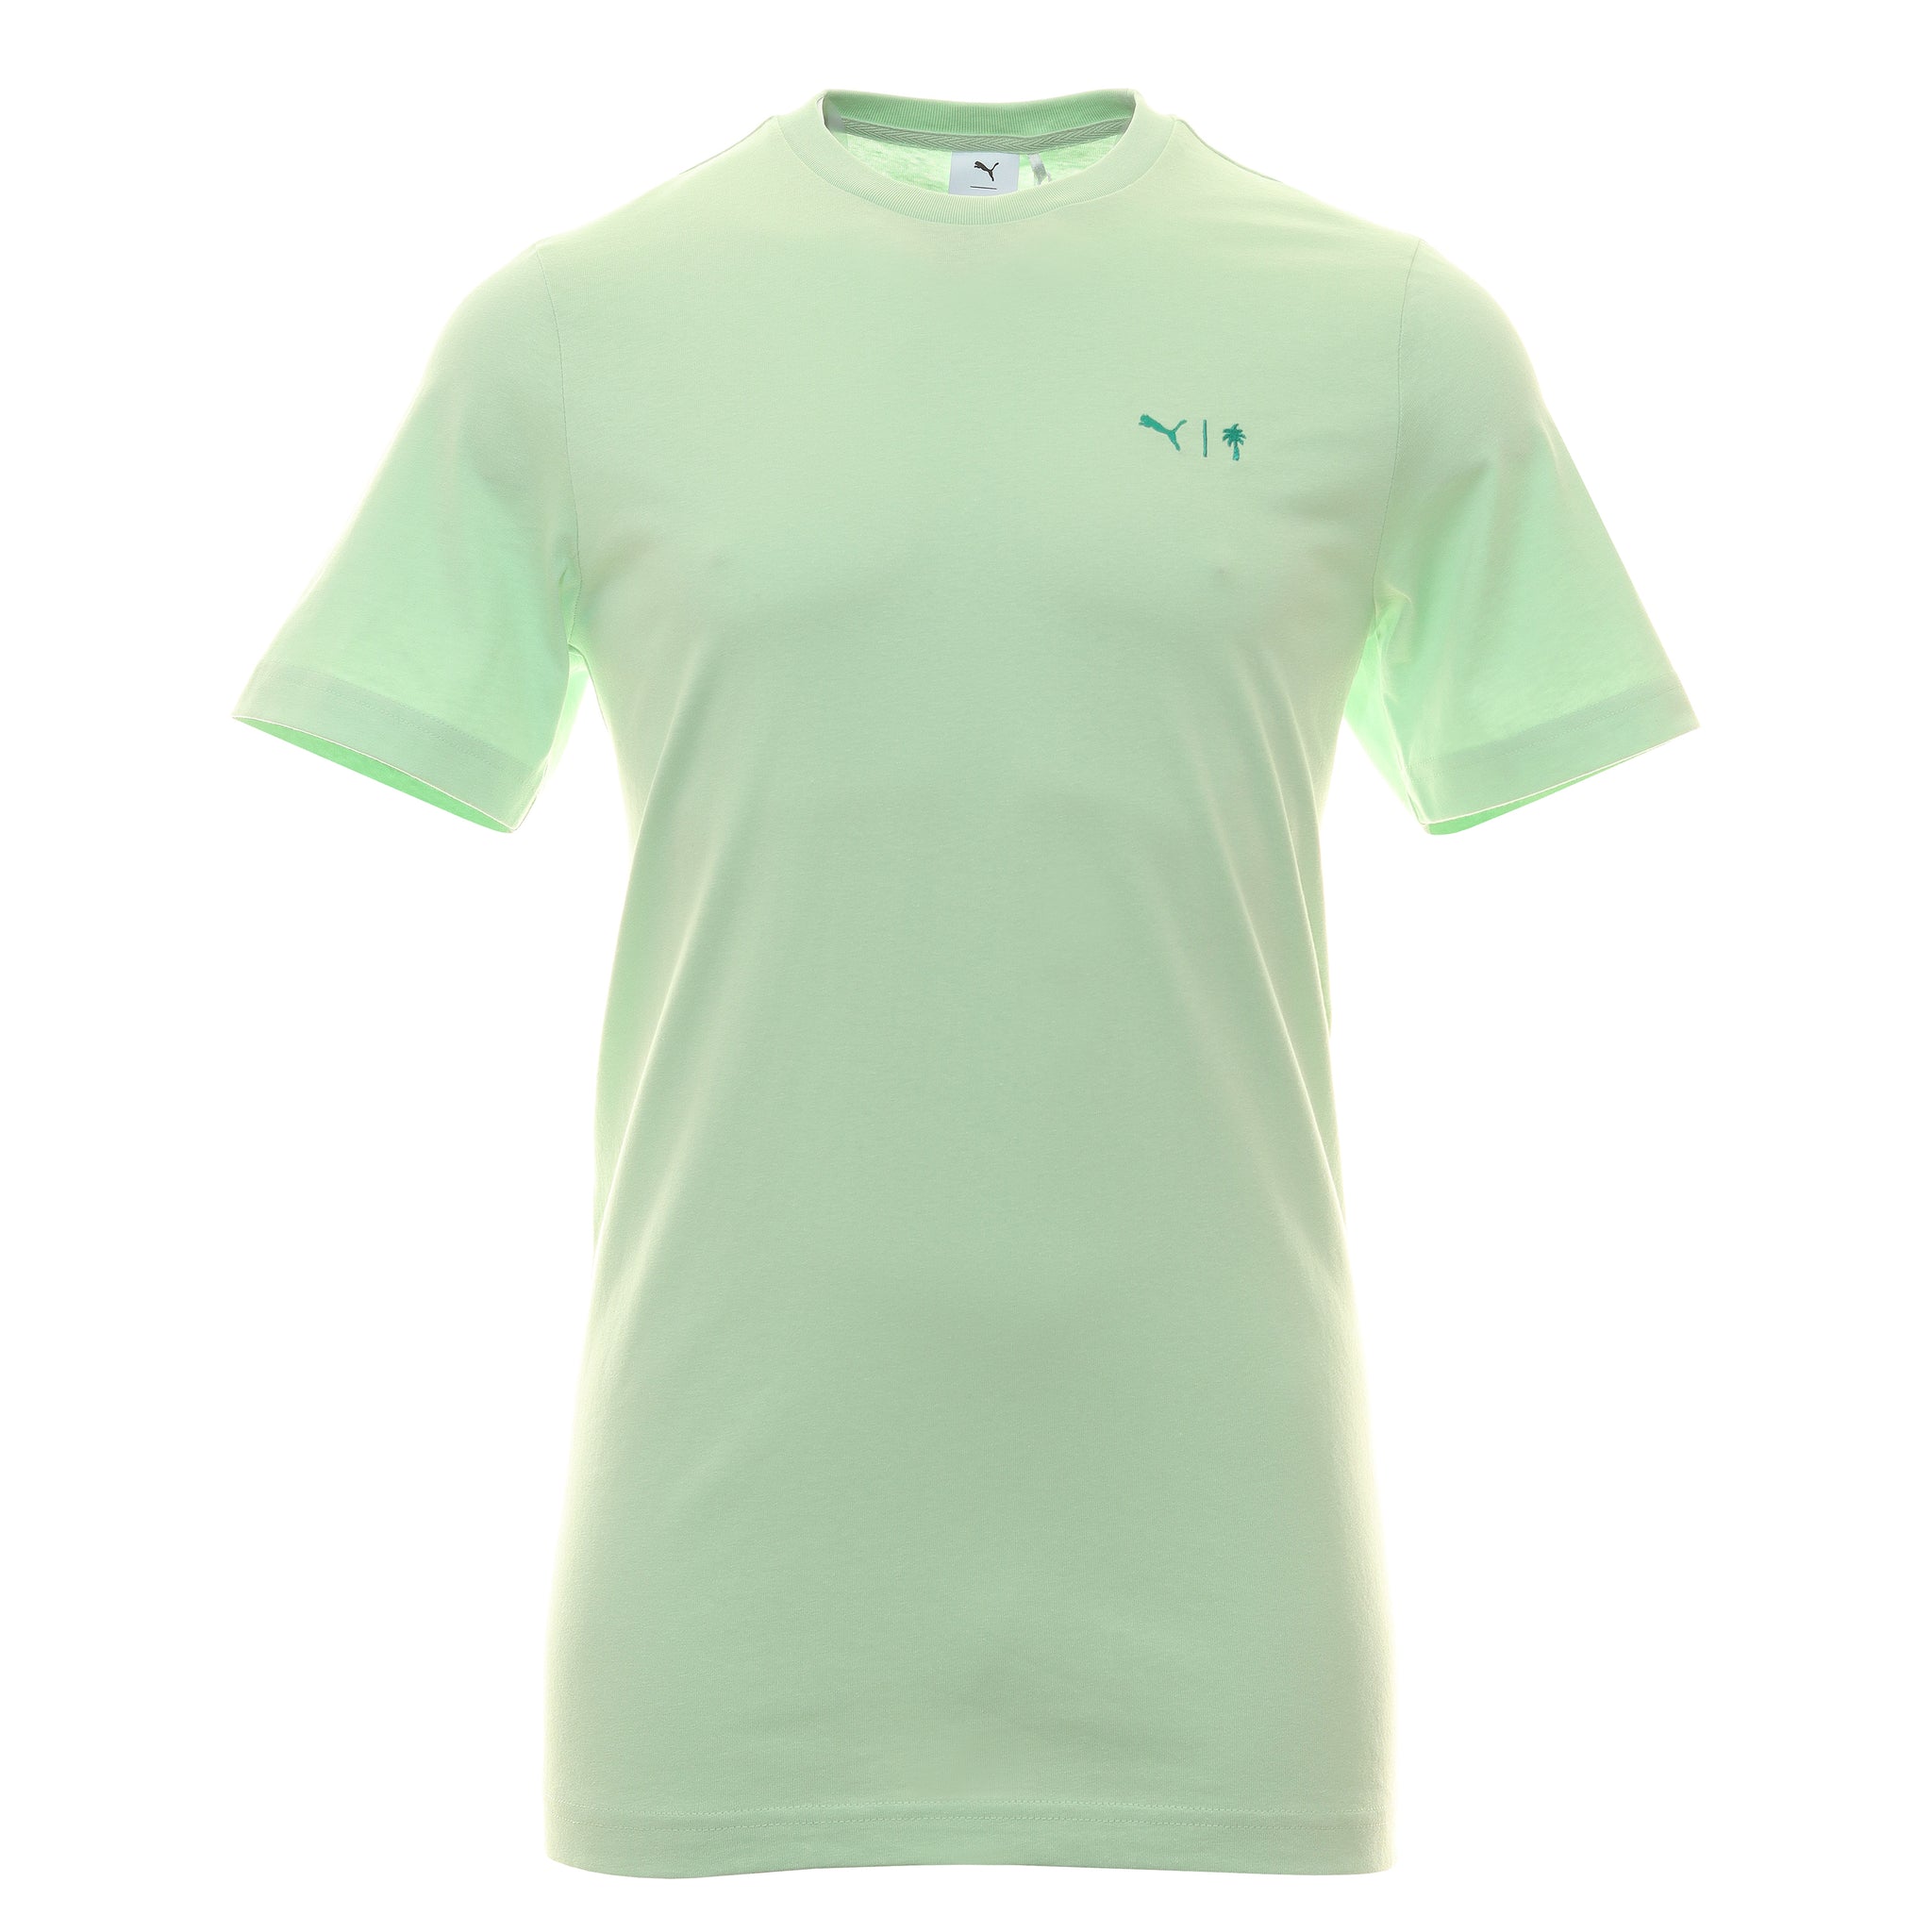 puma-golf-x-ptc-lifestyle-tee-shirt-622432-622432-light-mint-32